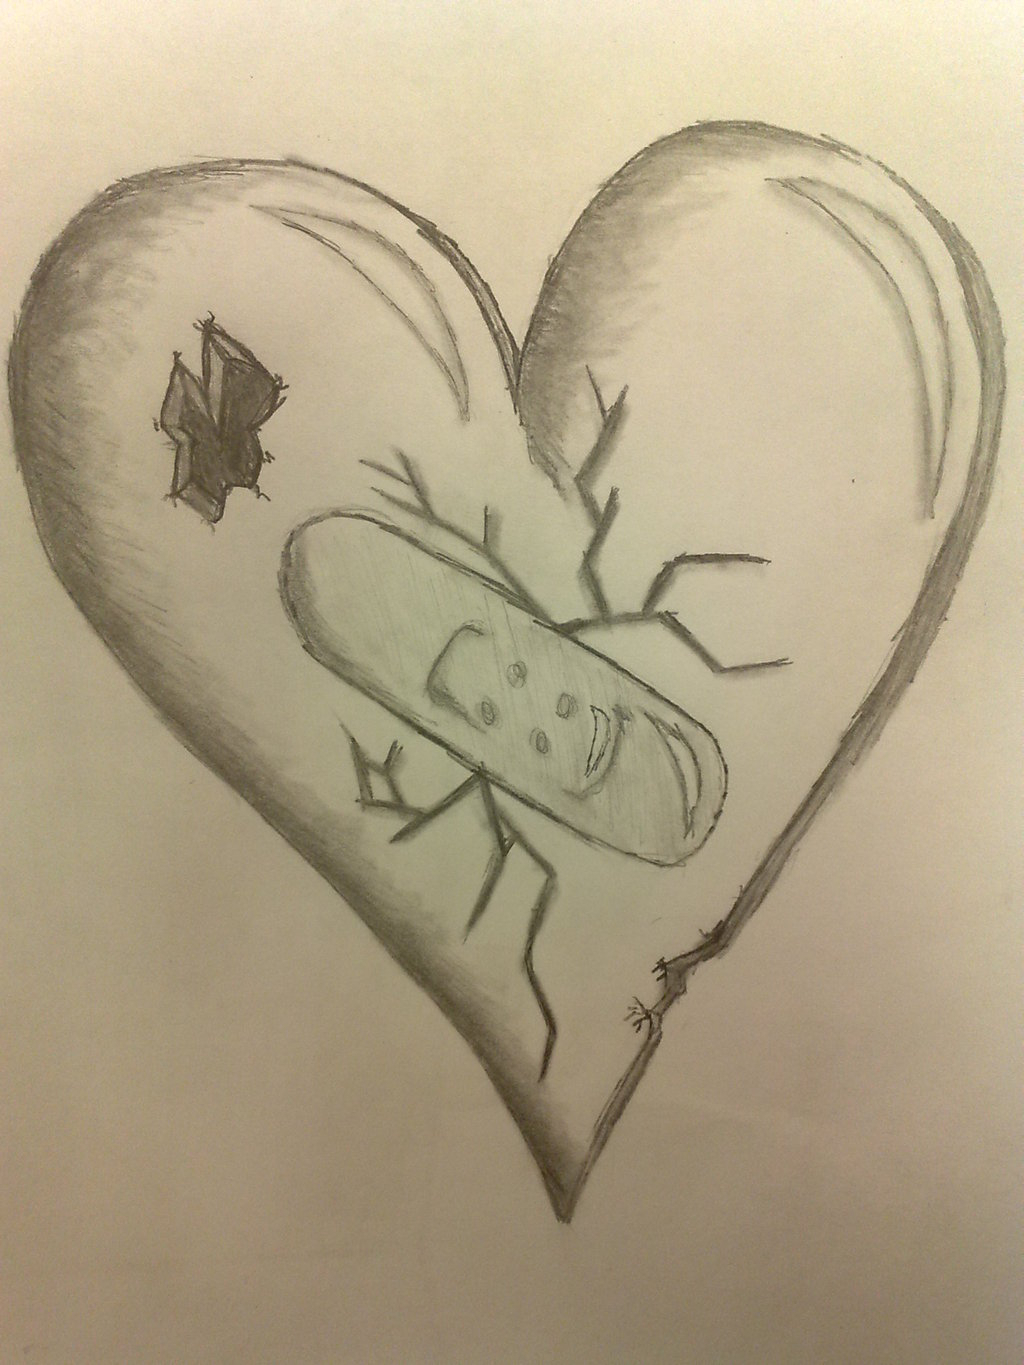 Broken Heart Pencil Drawing at GetDrawings Free download